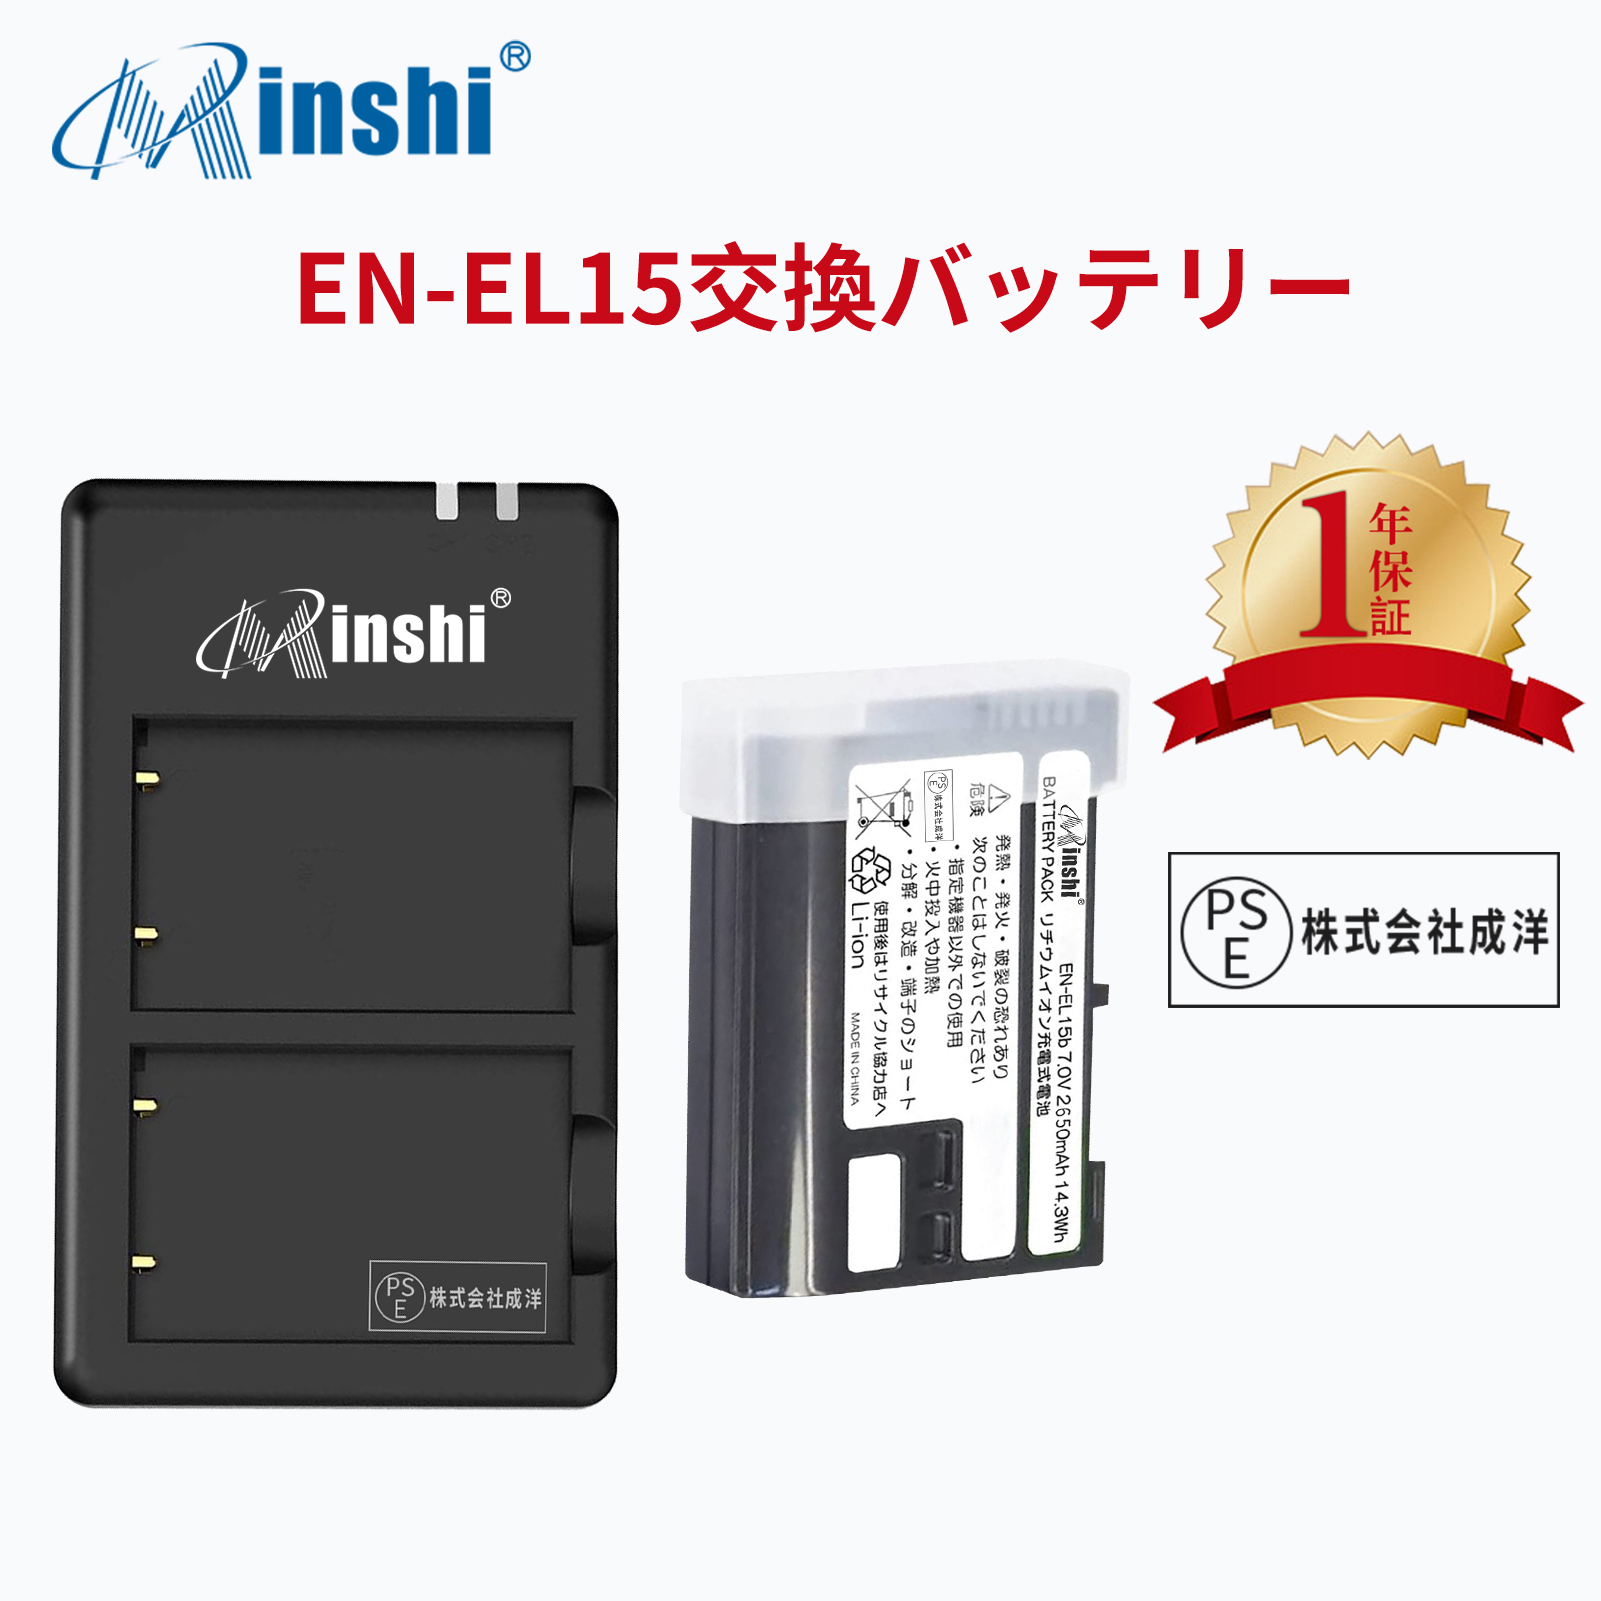 【1年保証 minshi】 Nikon EN-EL15 EN-EL15  【2650mAh 7.0V 】【互換急速USBチャージャー】 Z6 Z7 D750 PSE認定済 高品質 EN-EL15C 交換用バッテリー